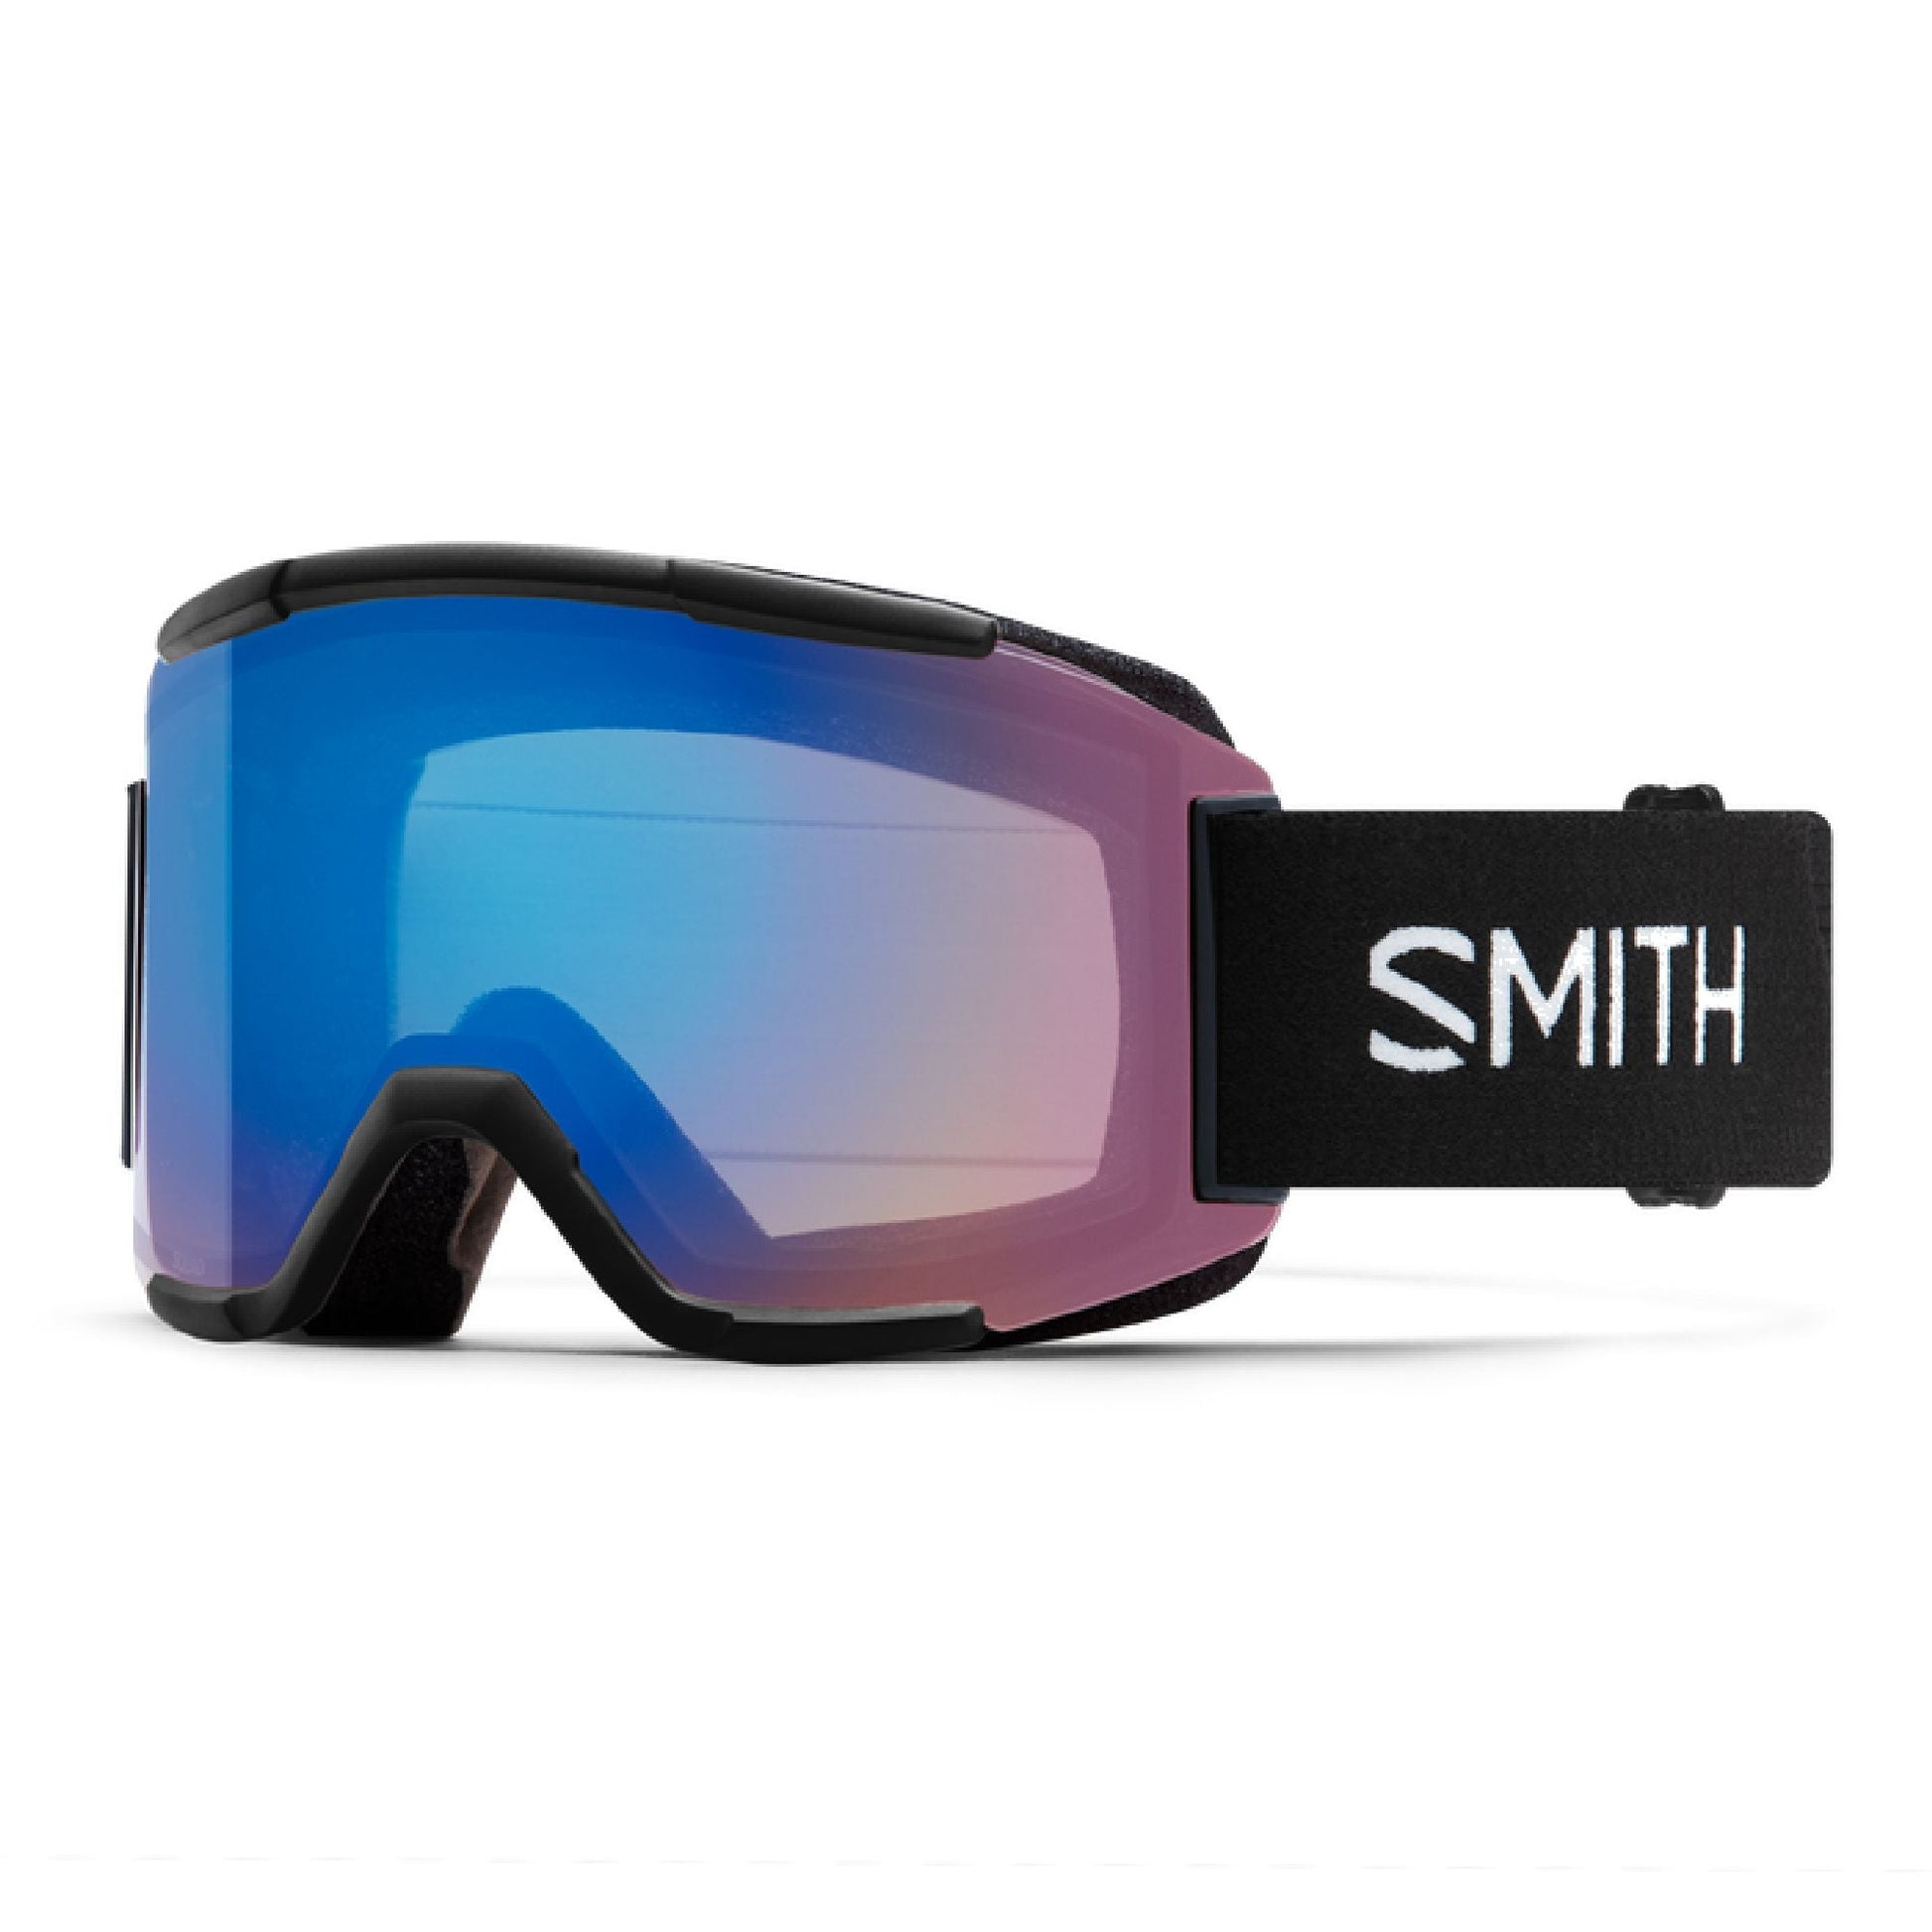 Smith Squad Snow Goggle - Openbox Black ChromaPop Storm Rose Flash - Smith Snow Goggles